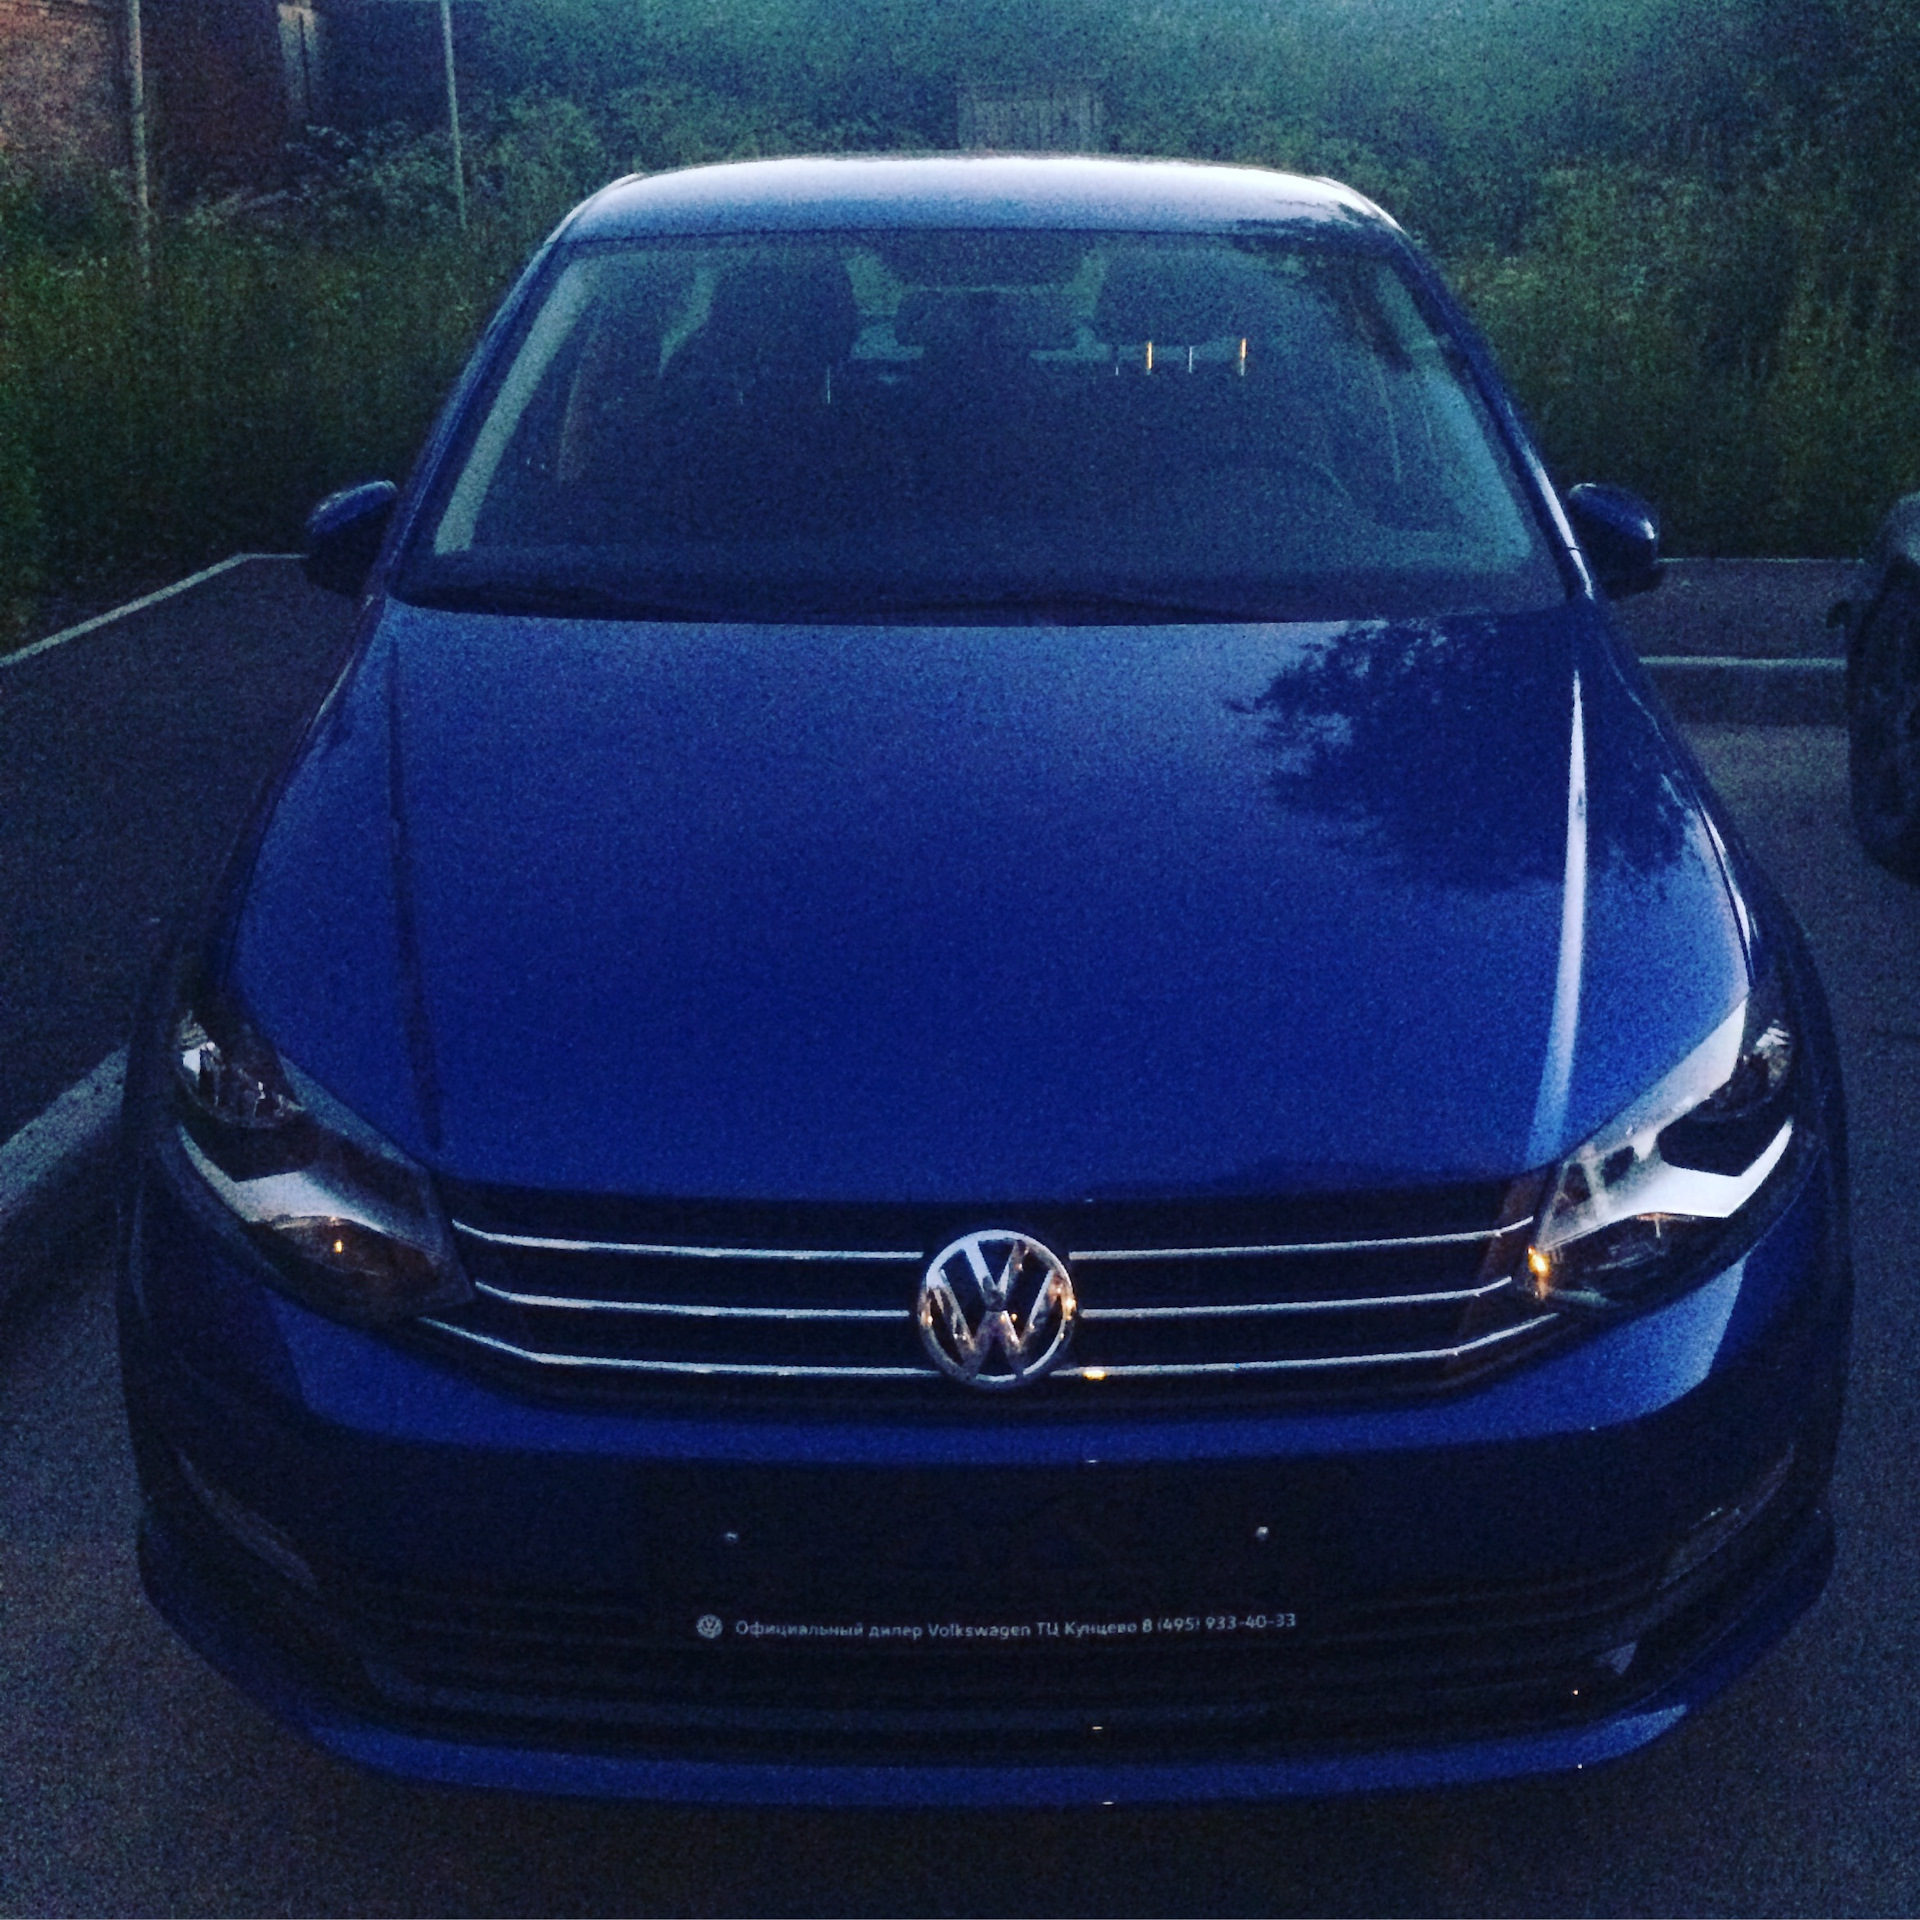 Volkswagen синий. Feef Blue поло Фольксваген. Фольксваген поло седан синий. Фольксваген поло 2018 синий. Фольксваген поло поло синий.